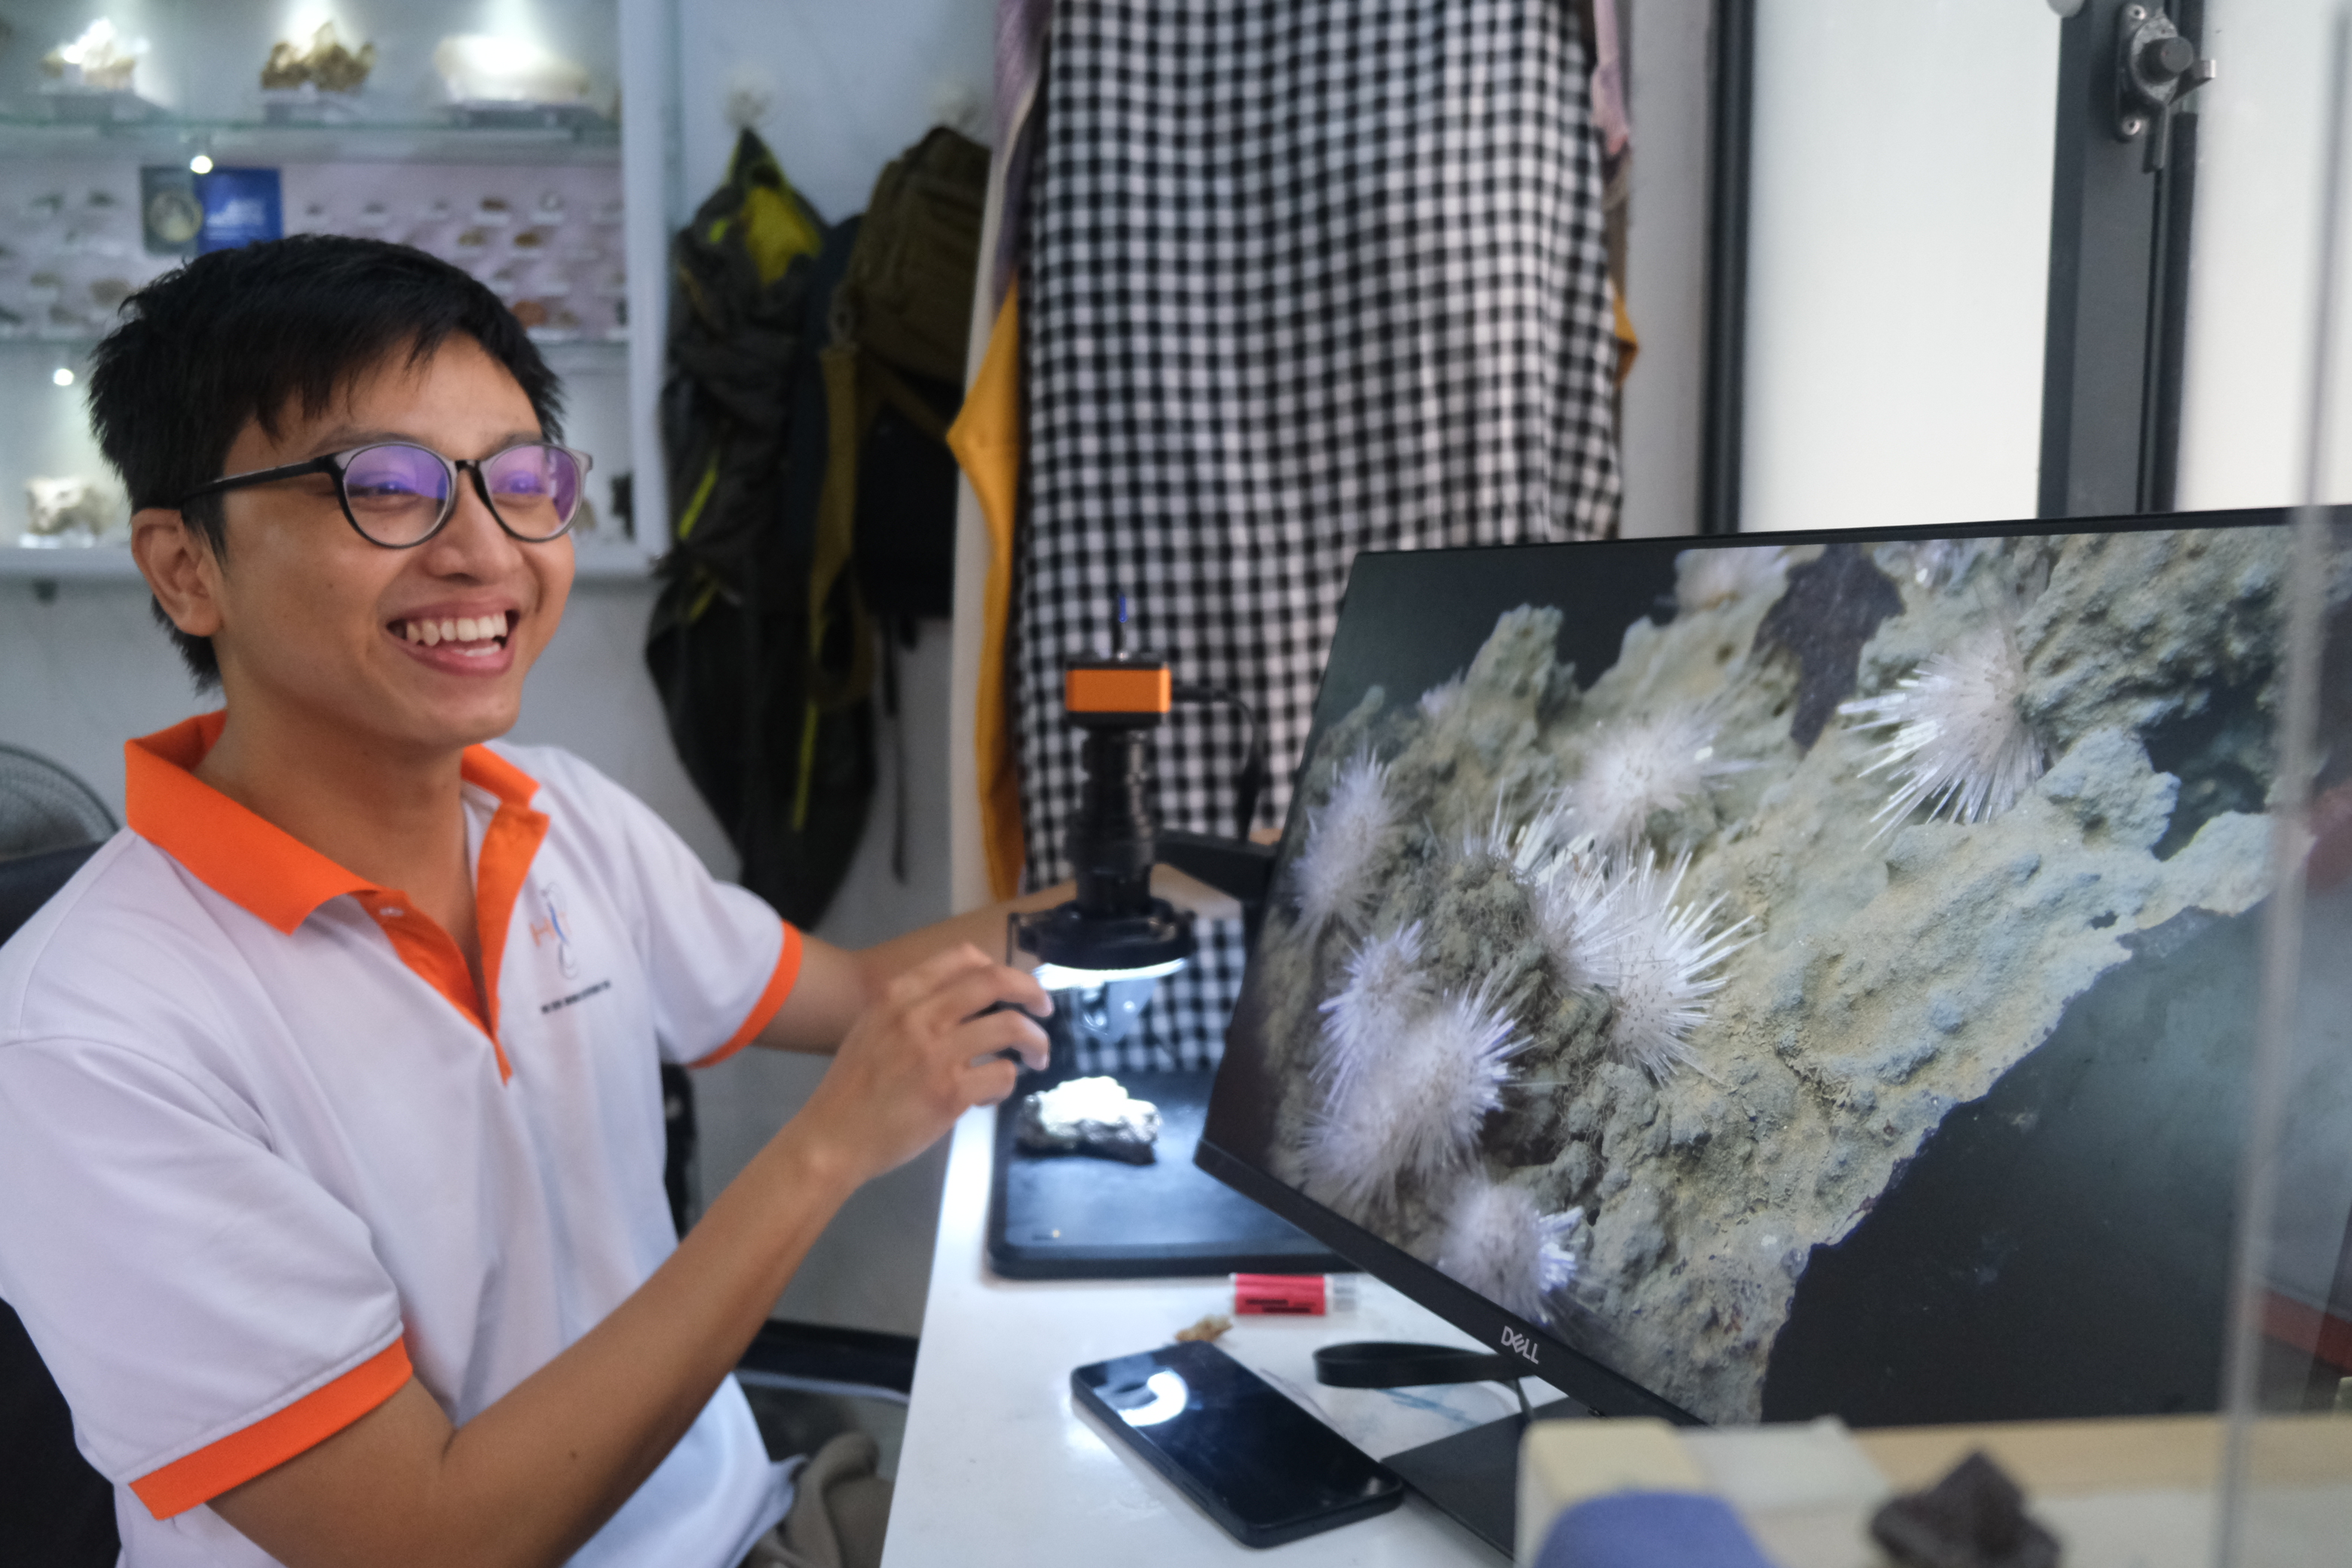 Tuyen examines a mineral sample under a microscope. Photo: Ngoc Phuong / Tuoi Tre News